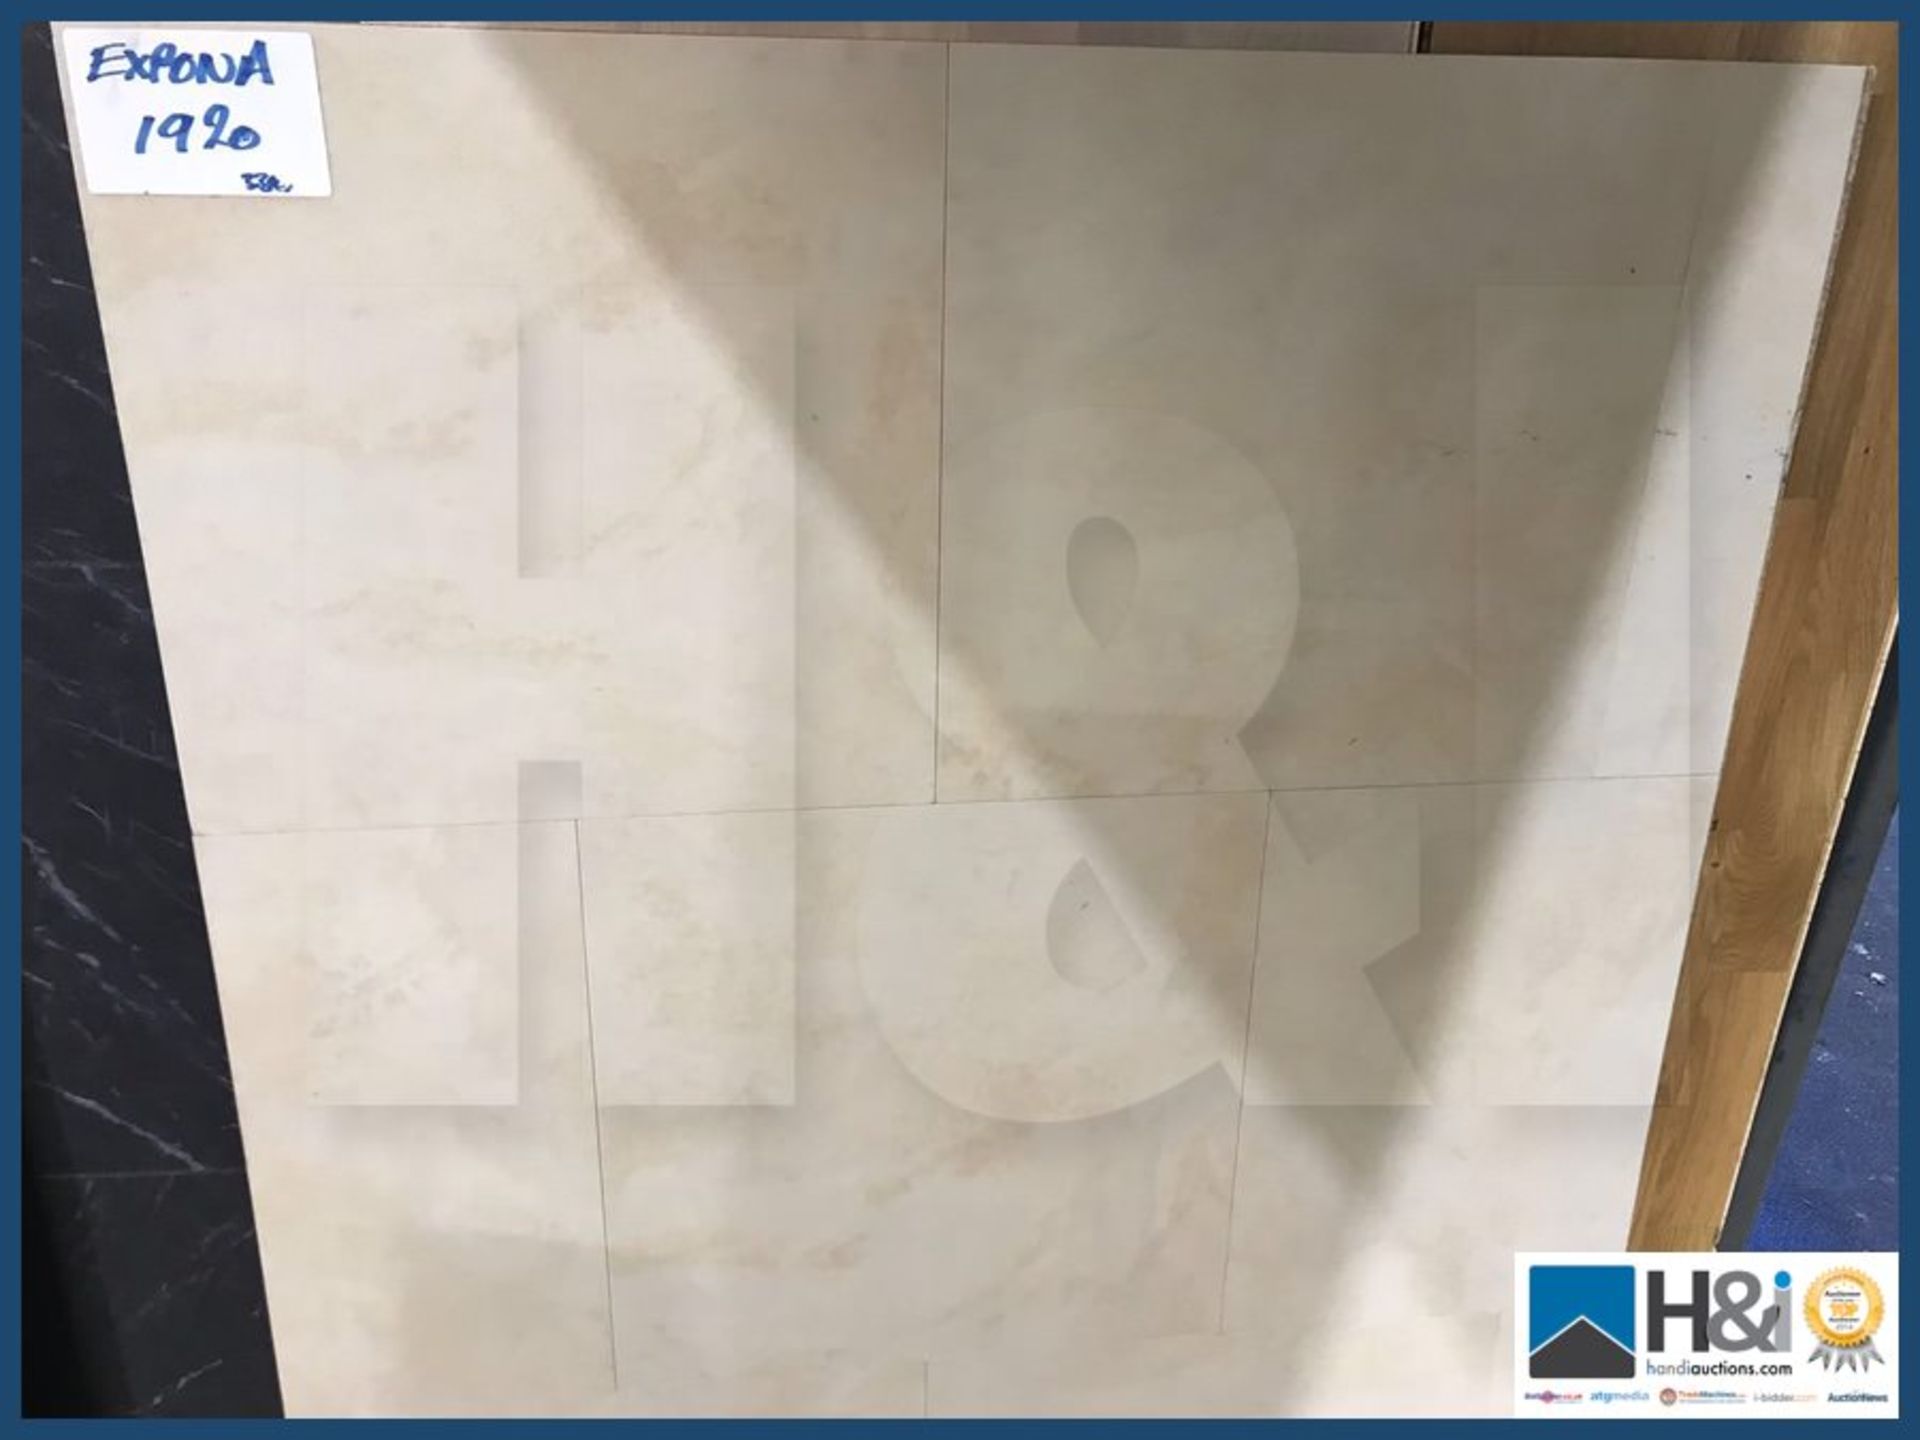 Polyflor Expona Natural Limestone tiles 18x18 inch. 3.34m2 per box 6 boxes = 20.06m2. RRP GBP650 per